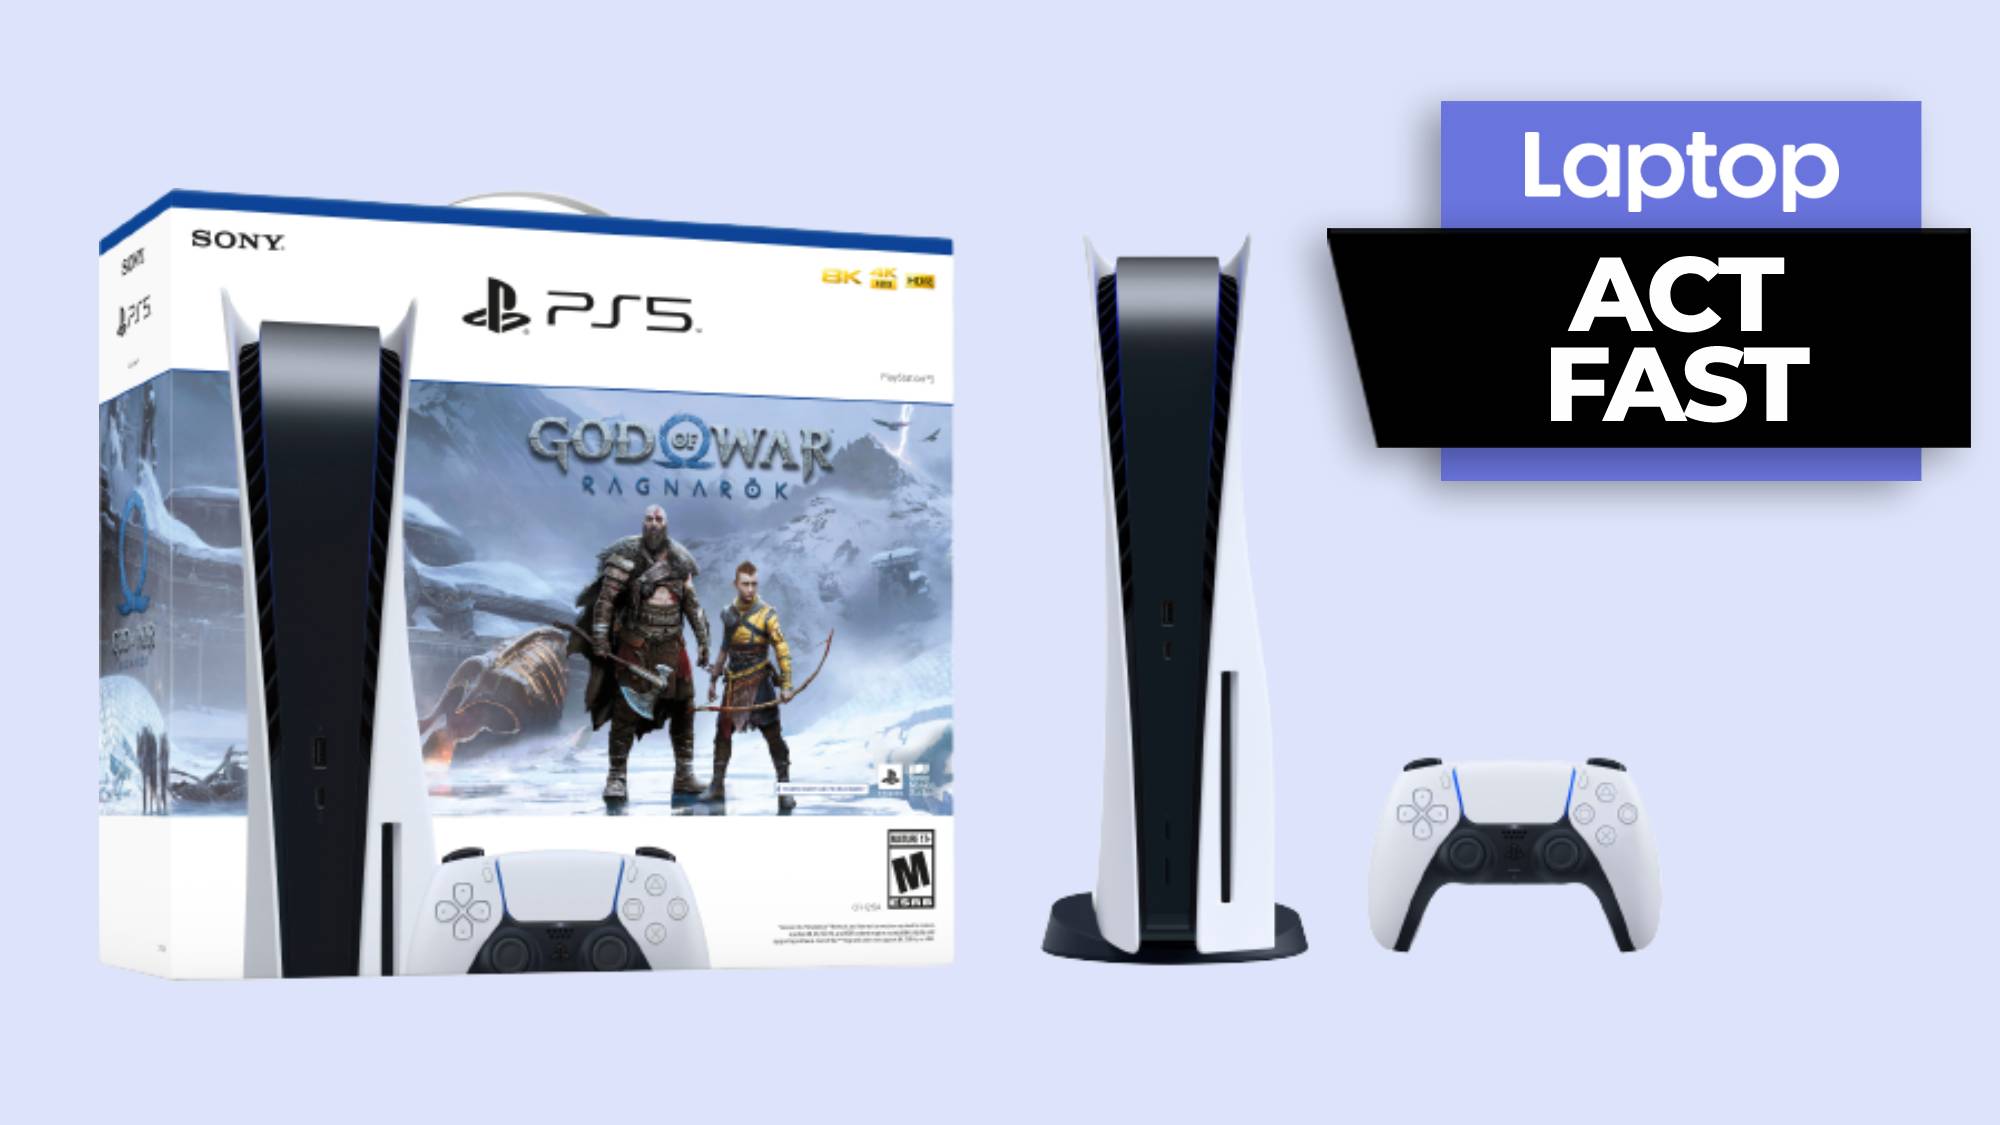 PS5 console and 'God of War Ragnarök' bundle is $50 off